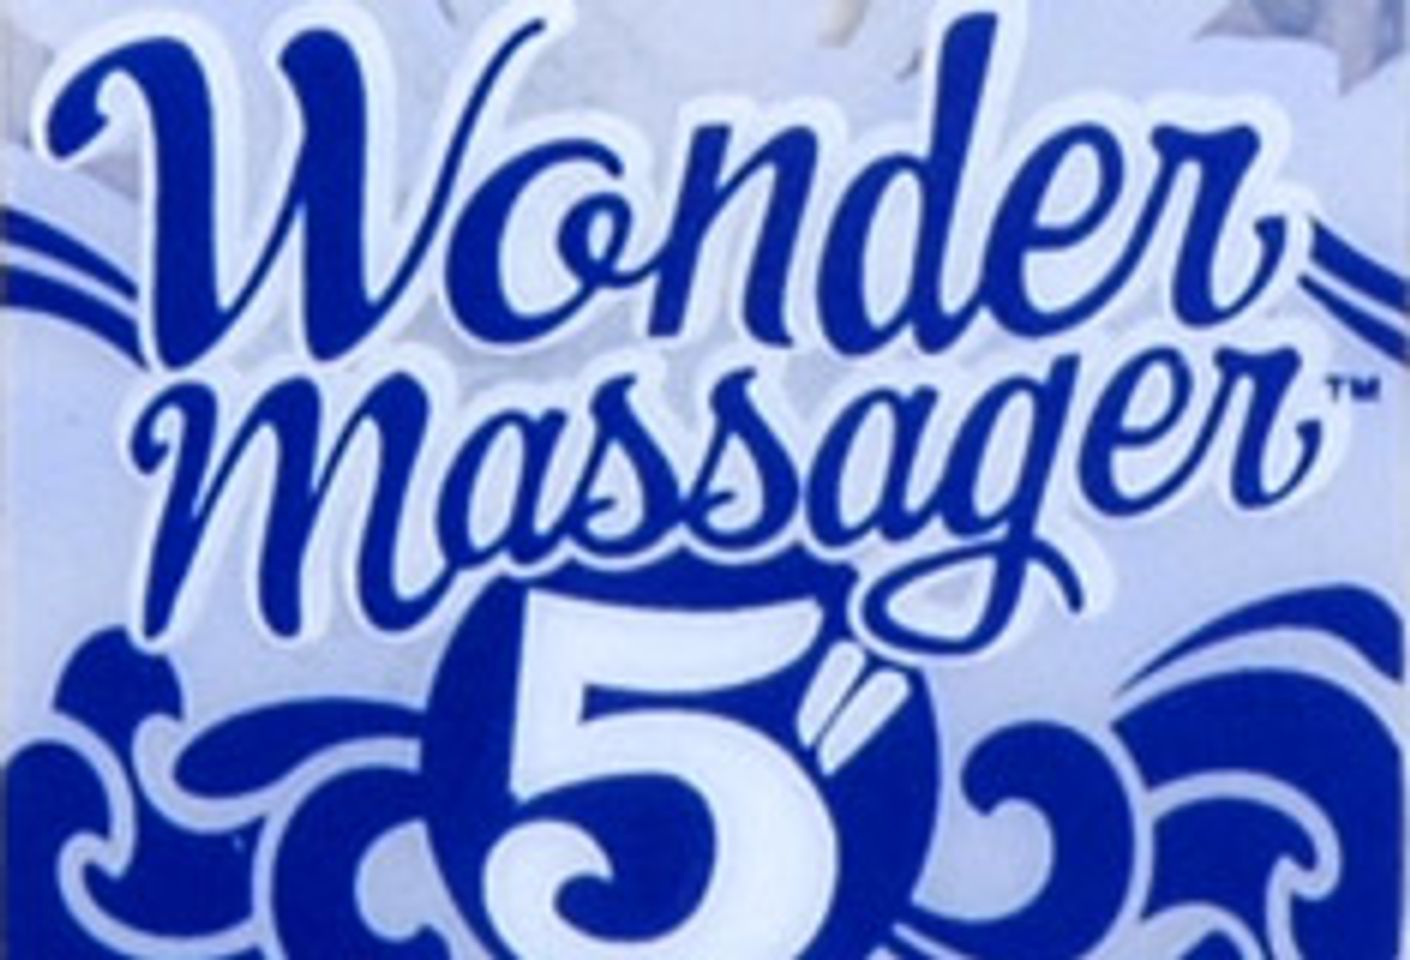 Doc Johnson Creates Wonder Massager